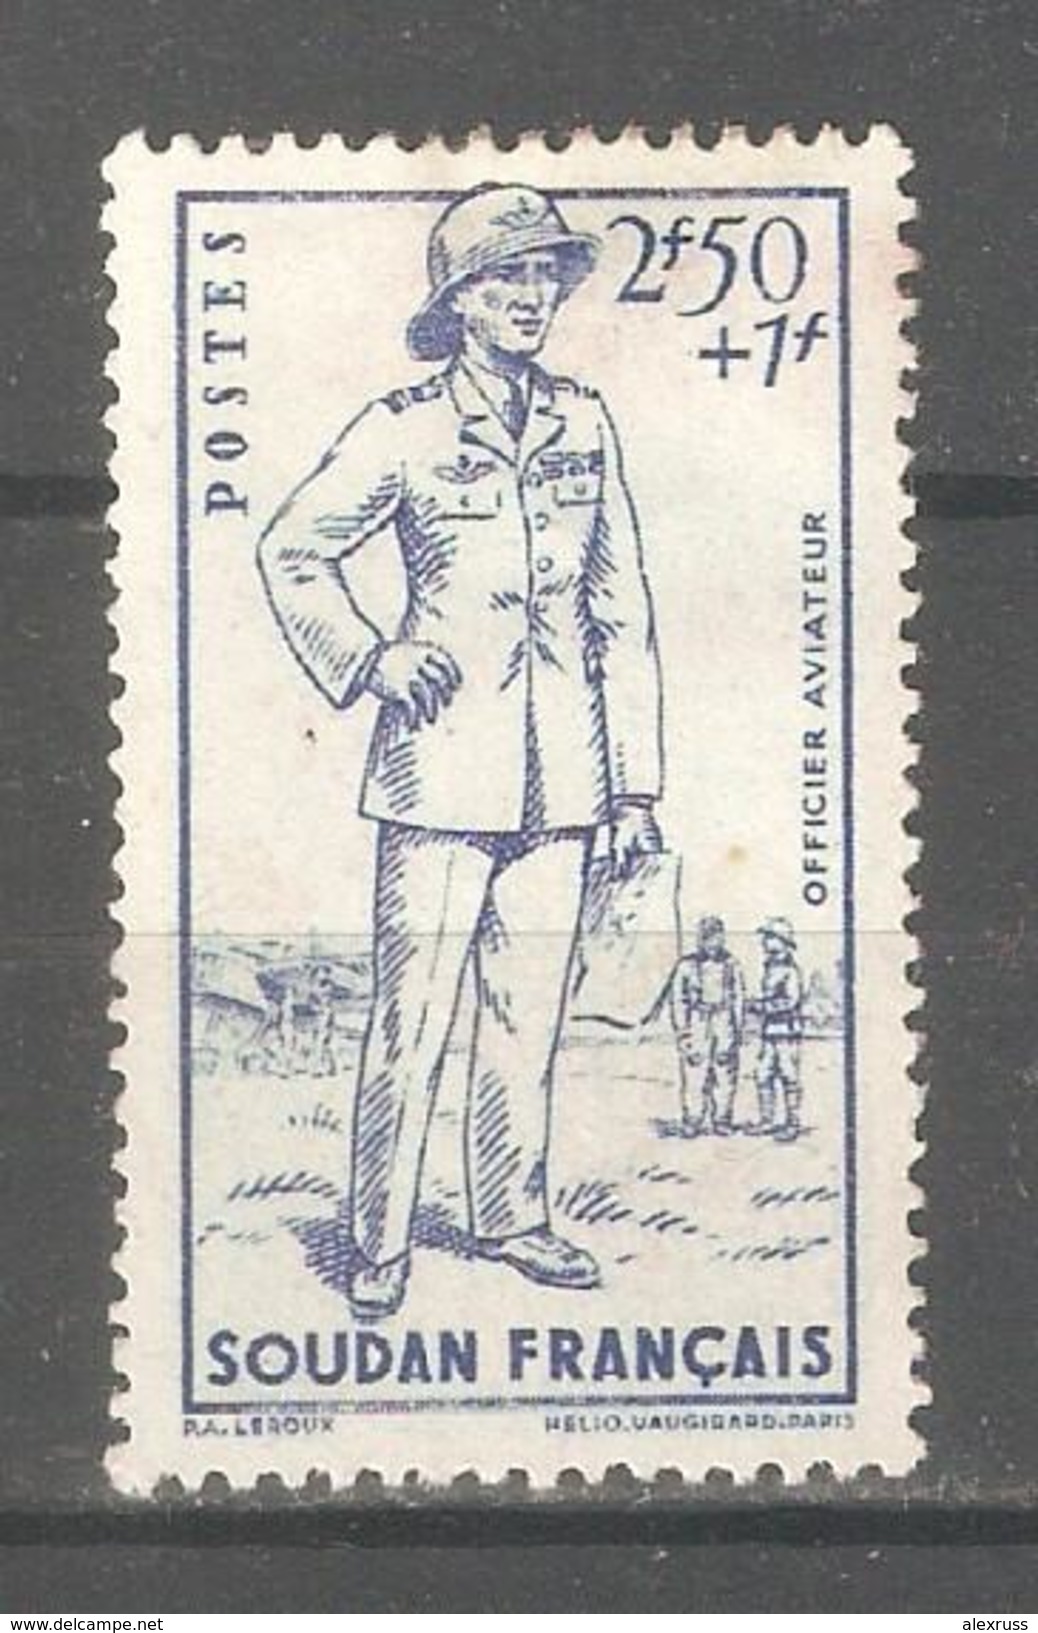 French Sudan 1941,Defense Of The Empire,Vichy Gov,Sc B13,Mint Hinged*OG (K-8) - 1941 Défense De L'Empire